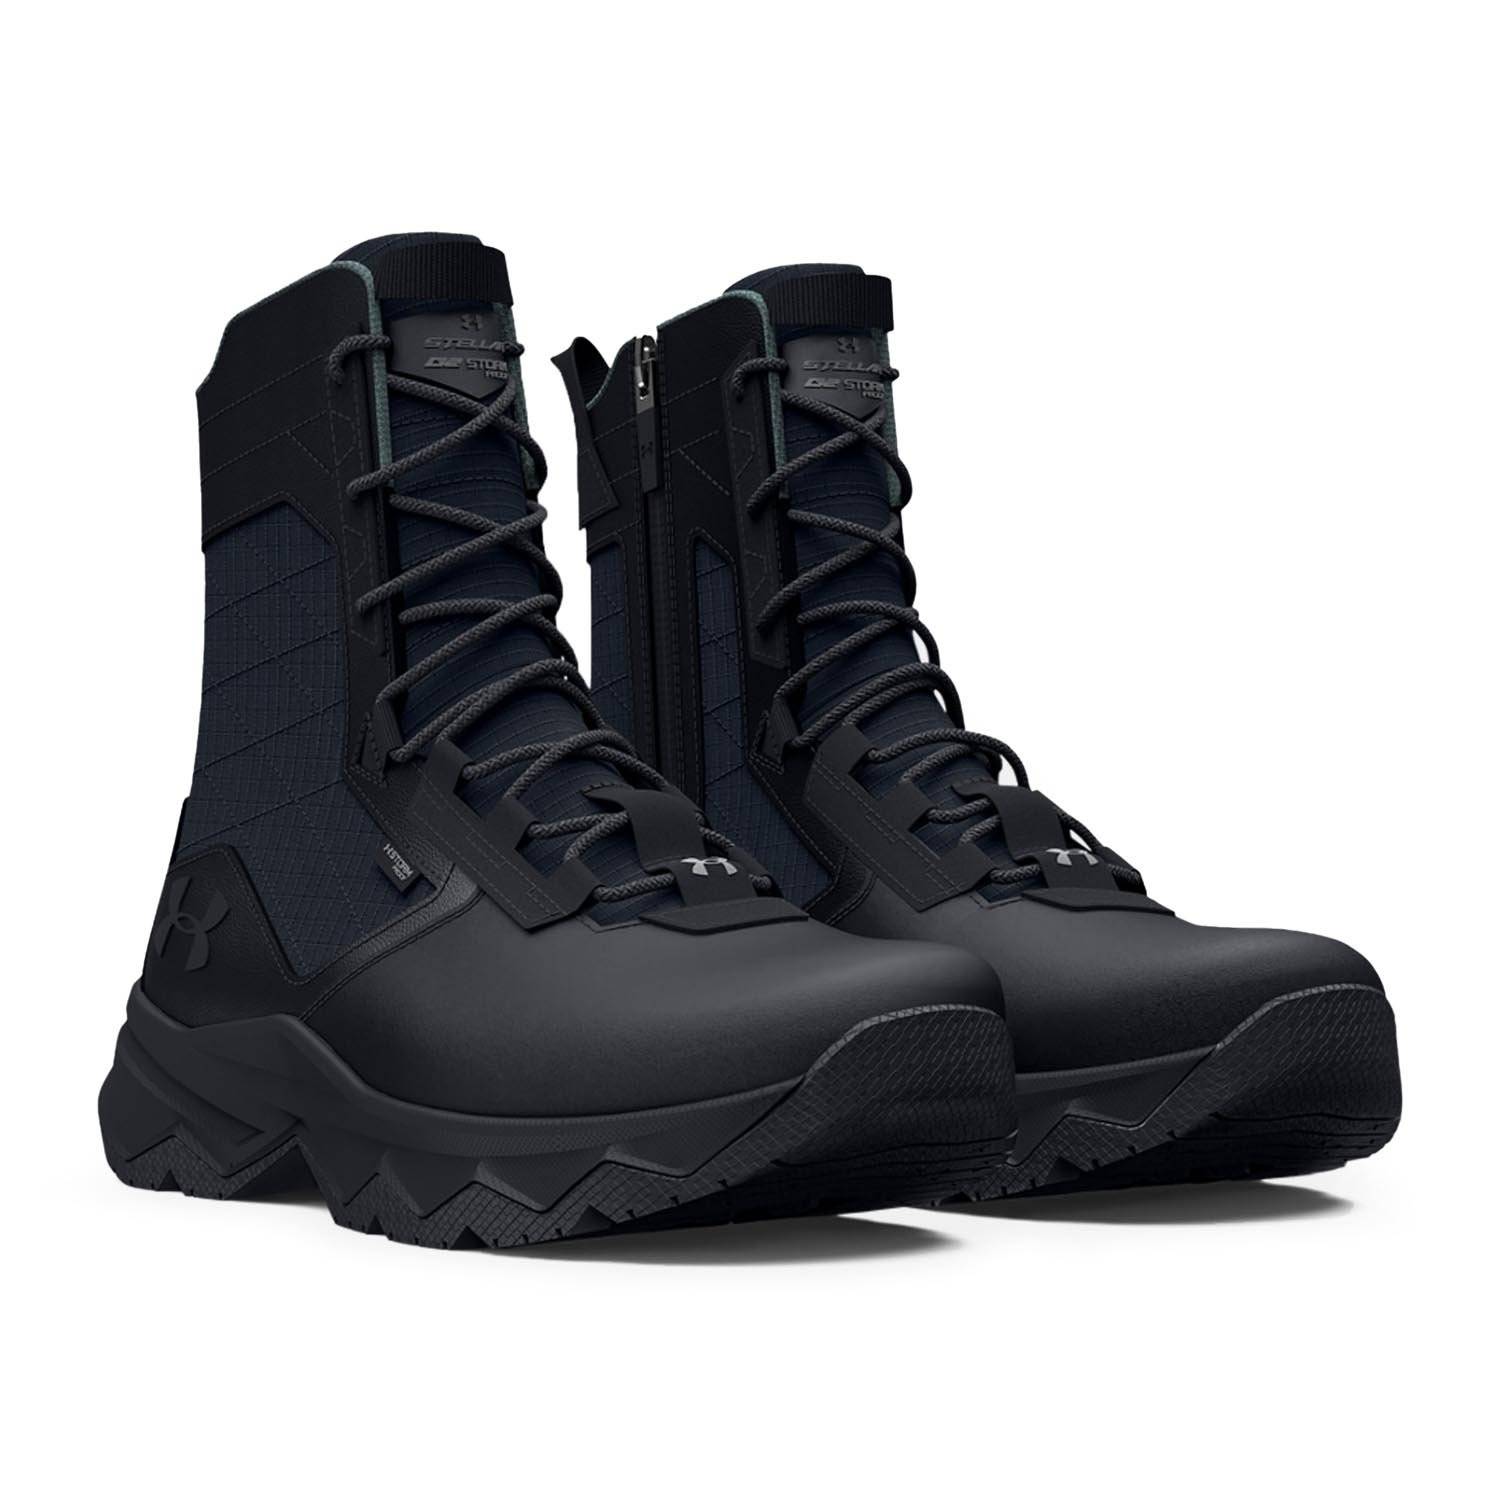 Under Armour Men's Stellar G2 Waterproof Zip Tactical Boots.